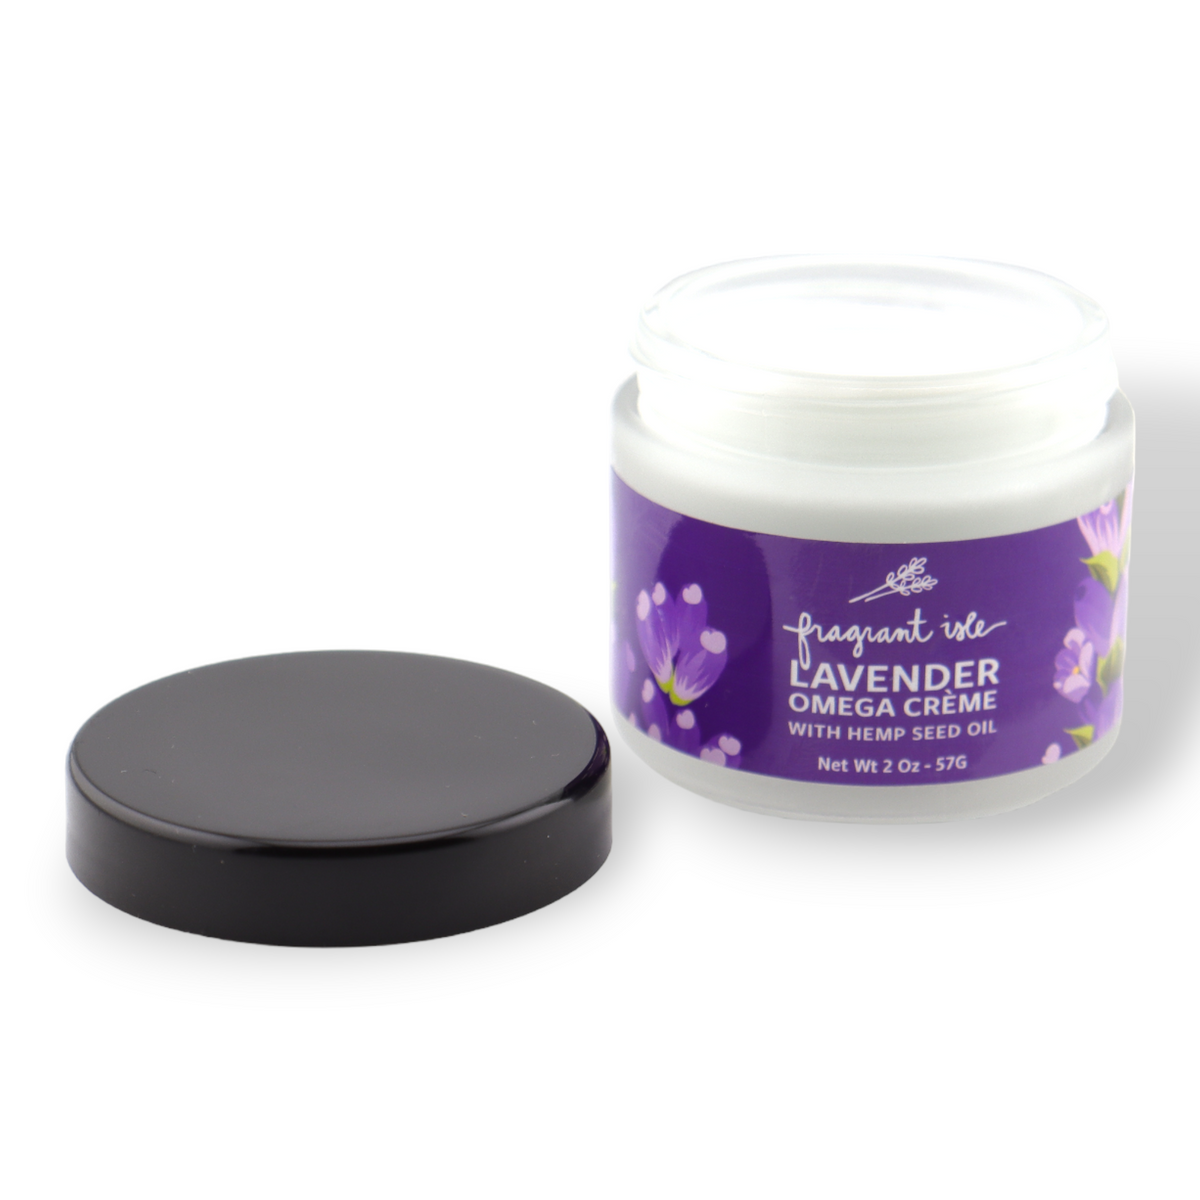 Lavender Shea Butter Soap - 6.35 oz – Fragrant Isle Lavender Farm & Shop